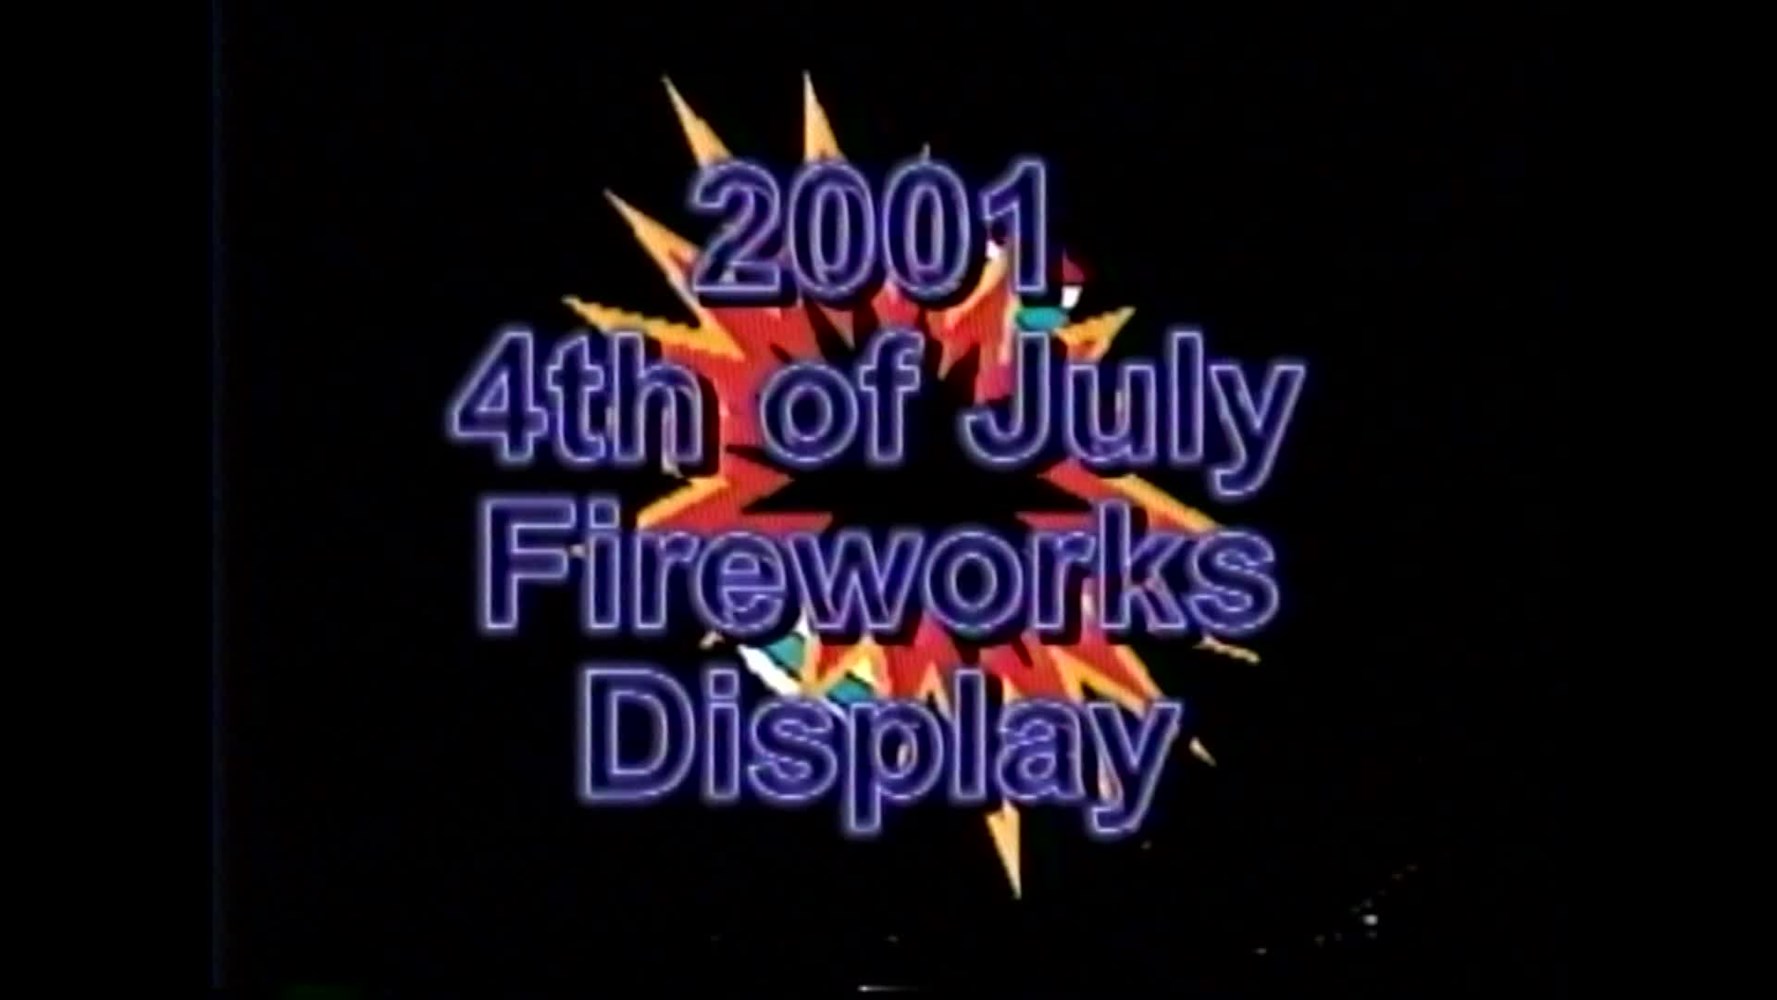 pittsfield township fireworks permit